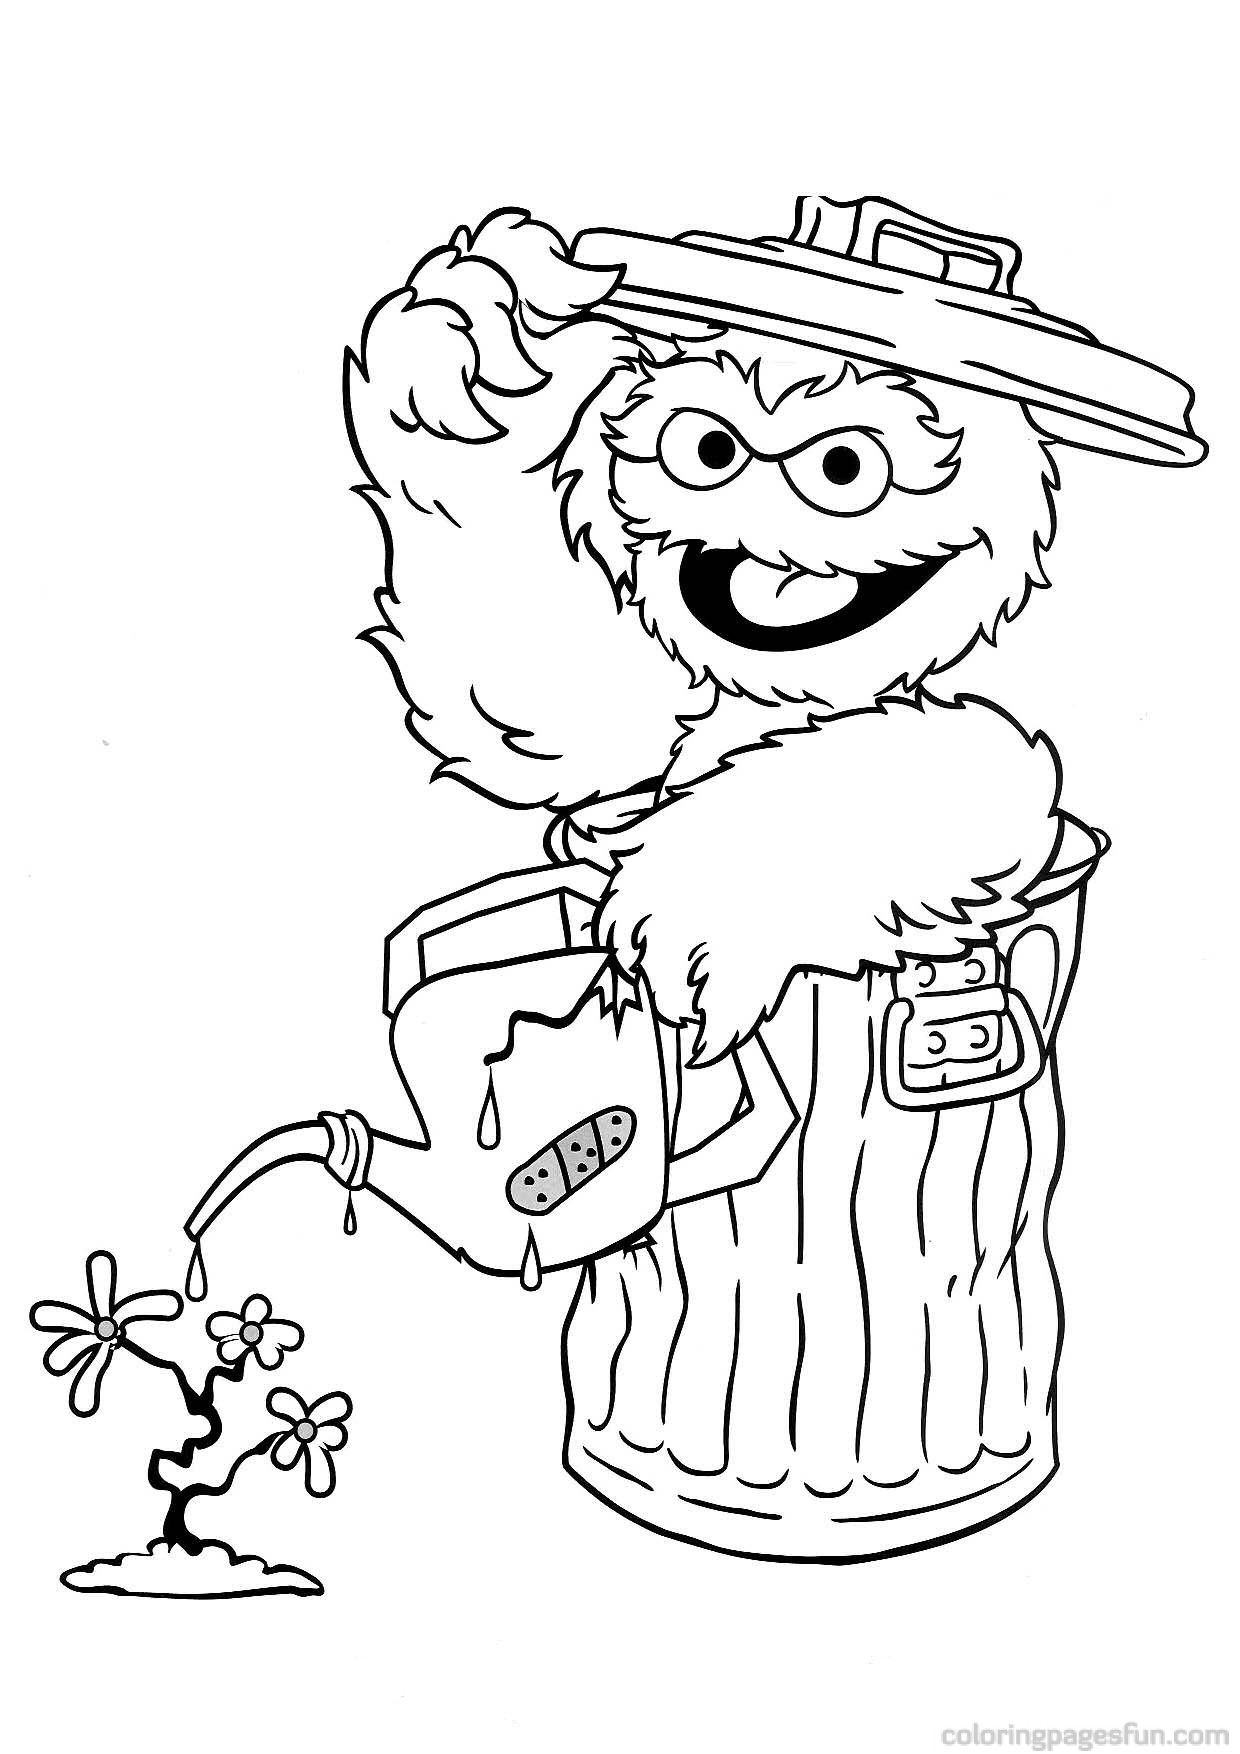 Sesame Street Characters Coloring Pages Elmo - VoteForVerde.com